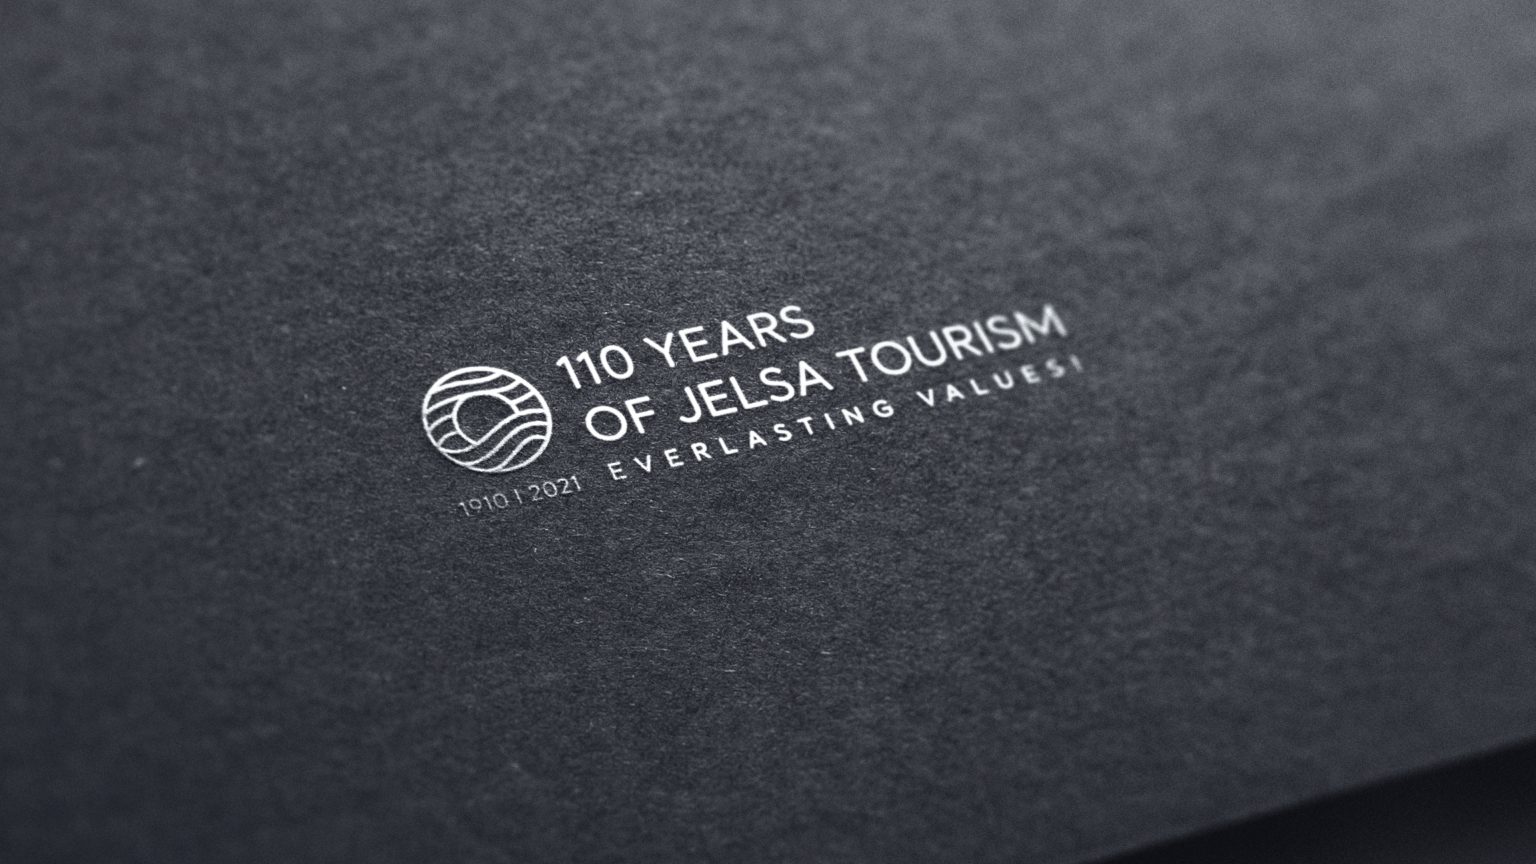 110 Years of Jelsa Tourism